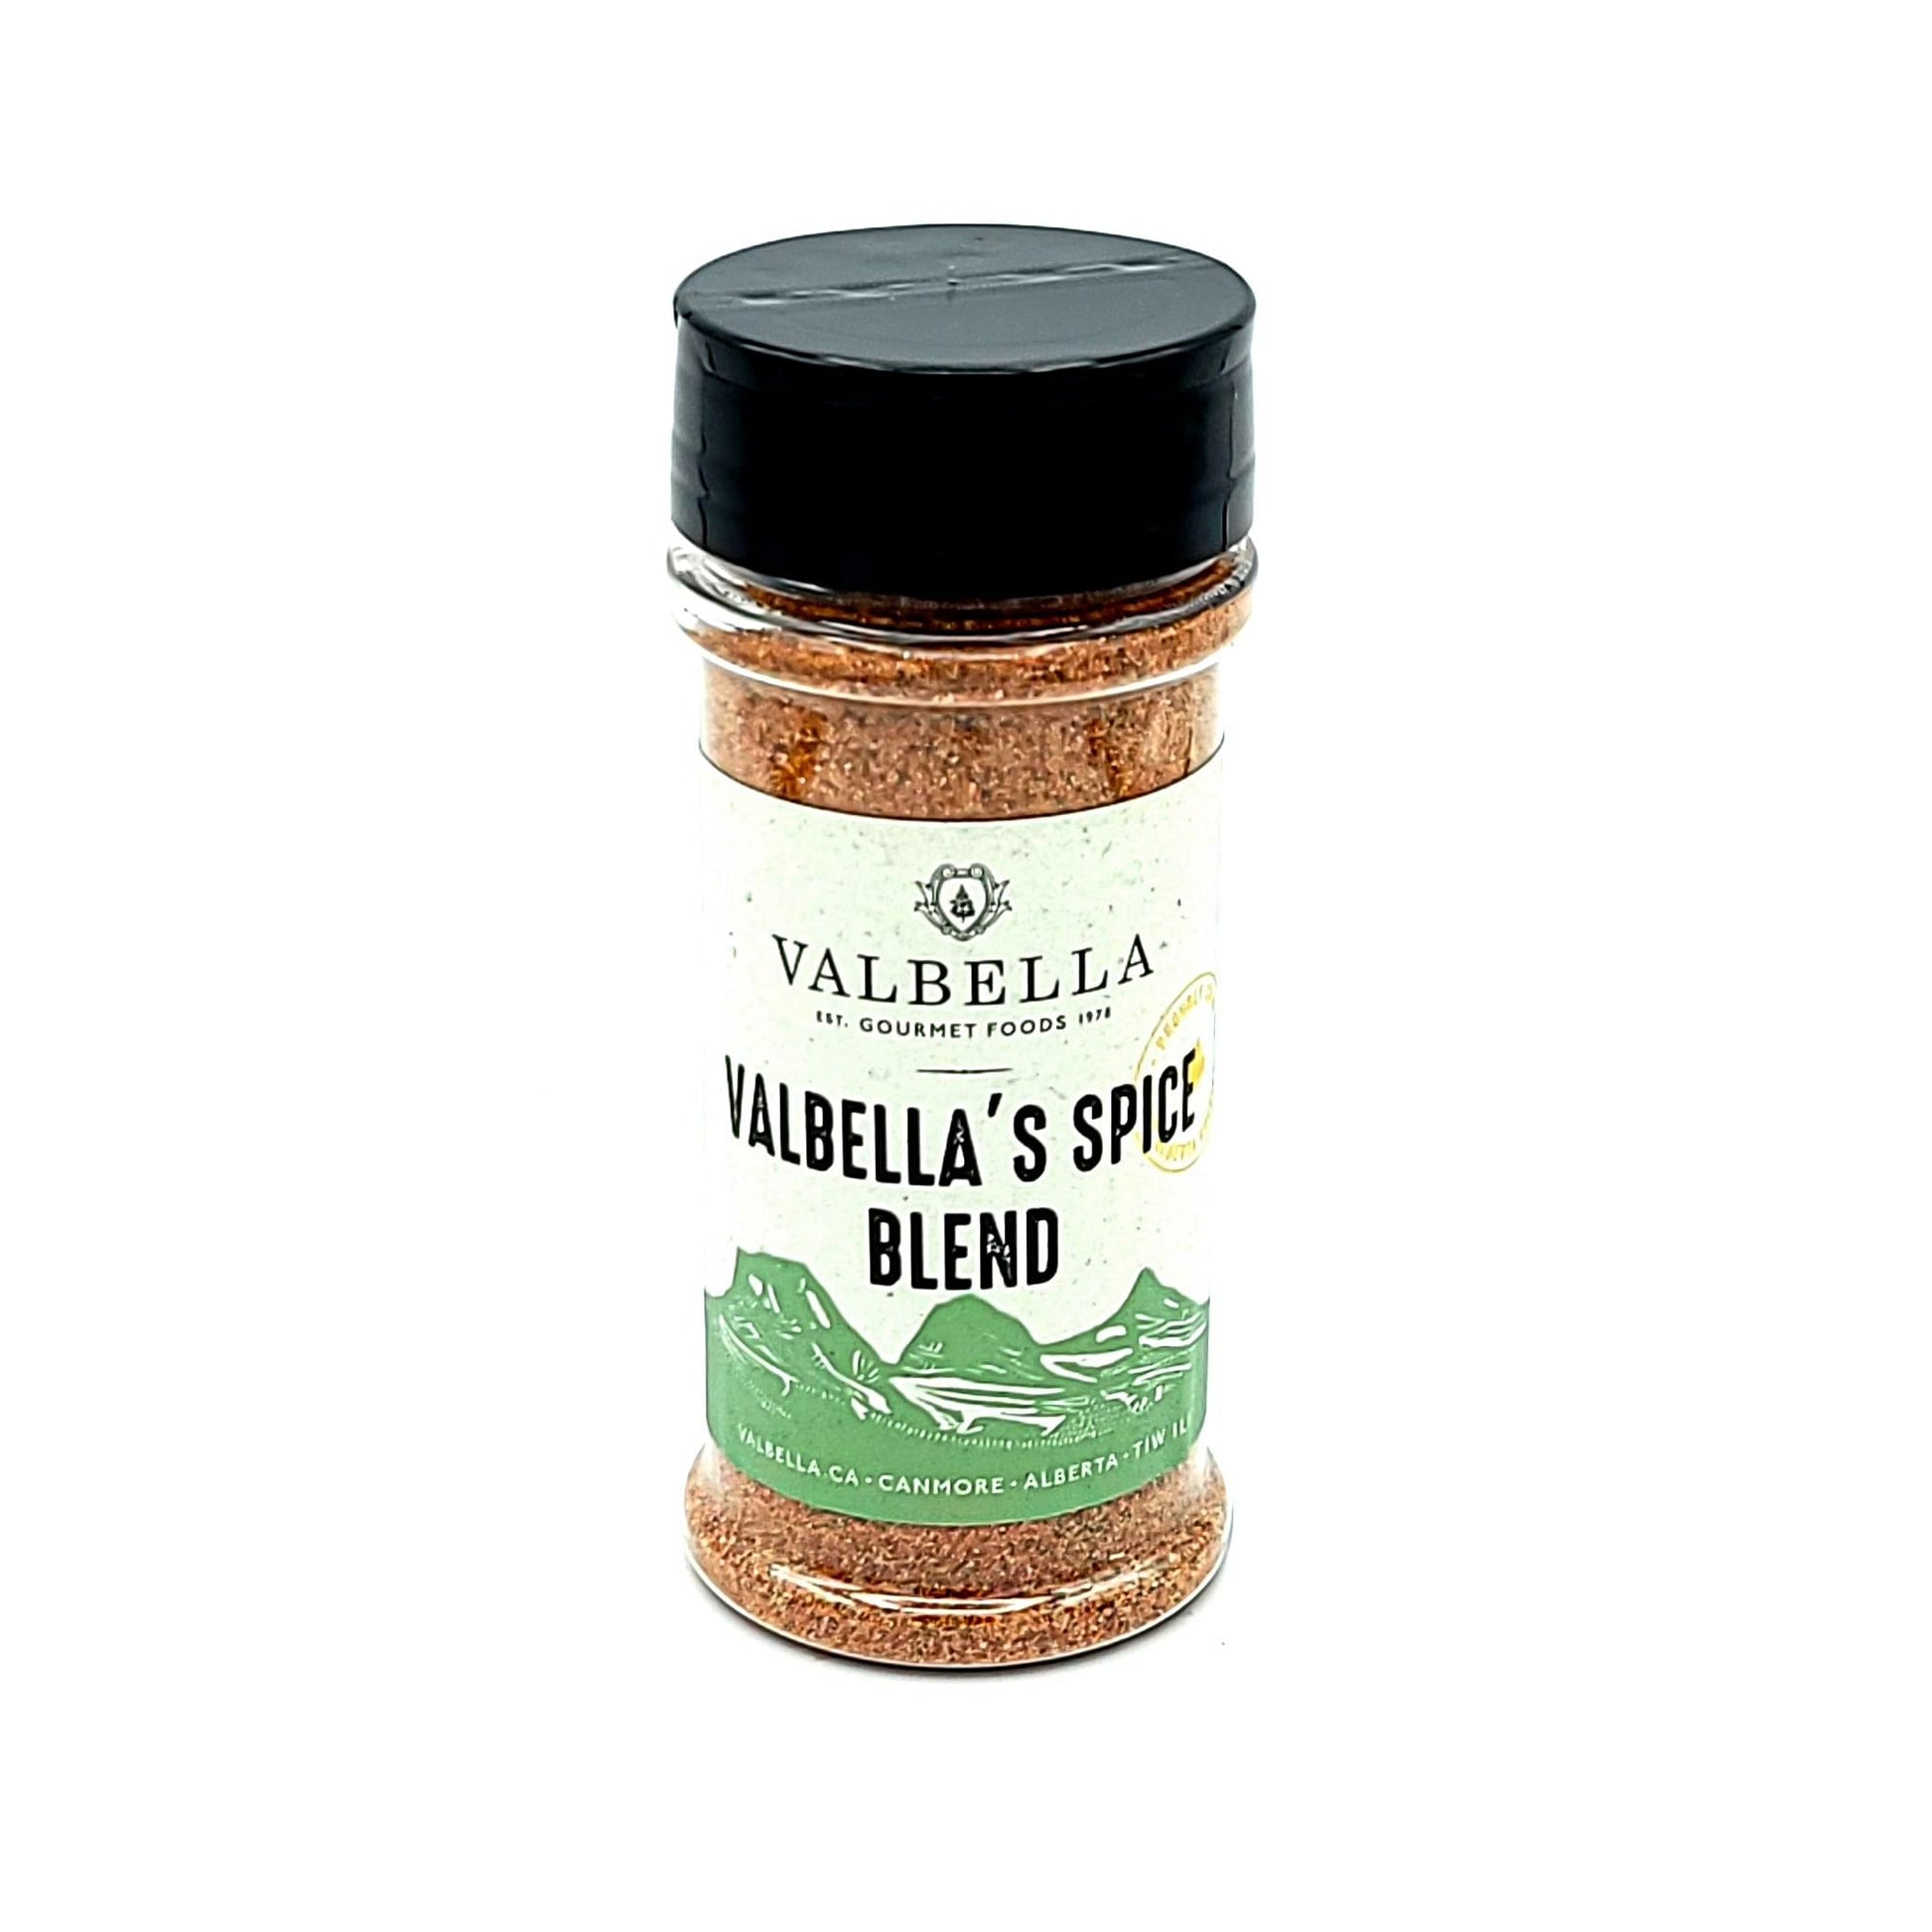 Valbella's Spice Blend - 180g - Valbella Gourmet Foods